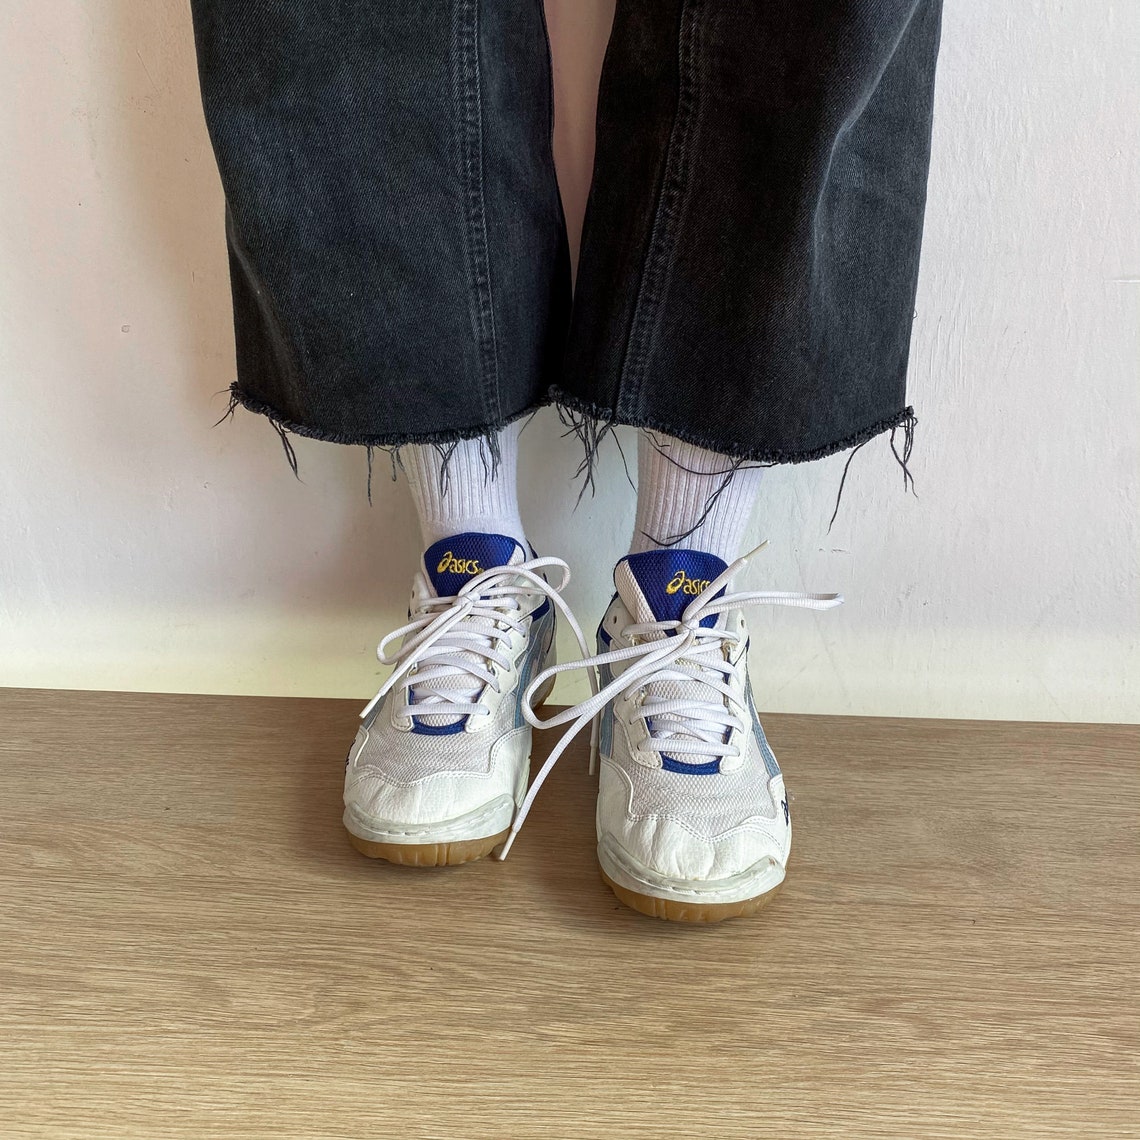 Vintage Asics GEL ugly sneakers white / blue | Etsy